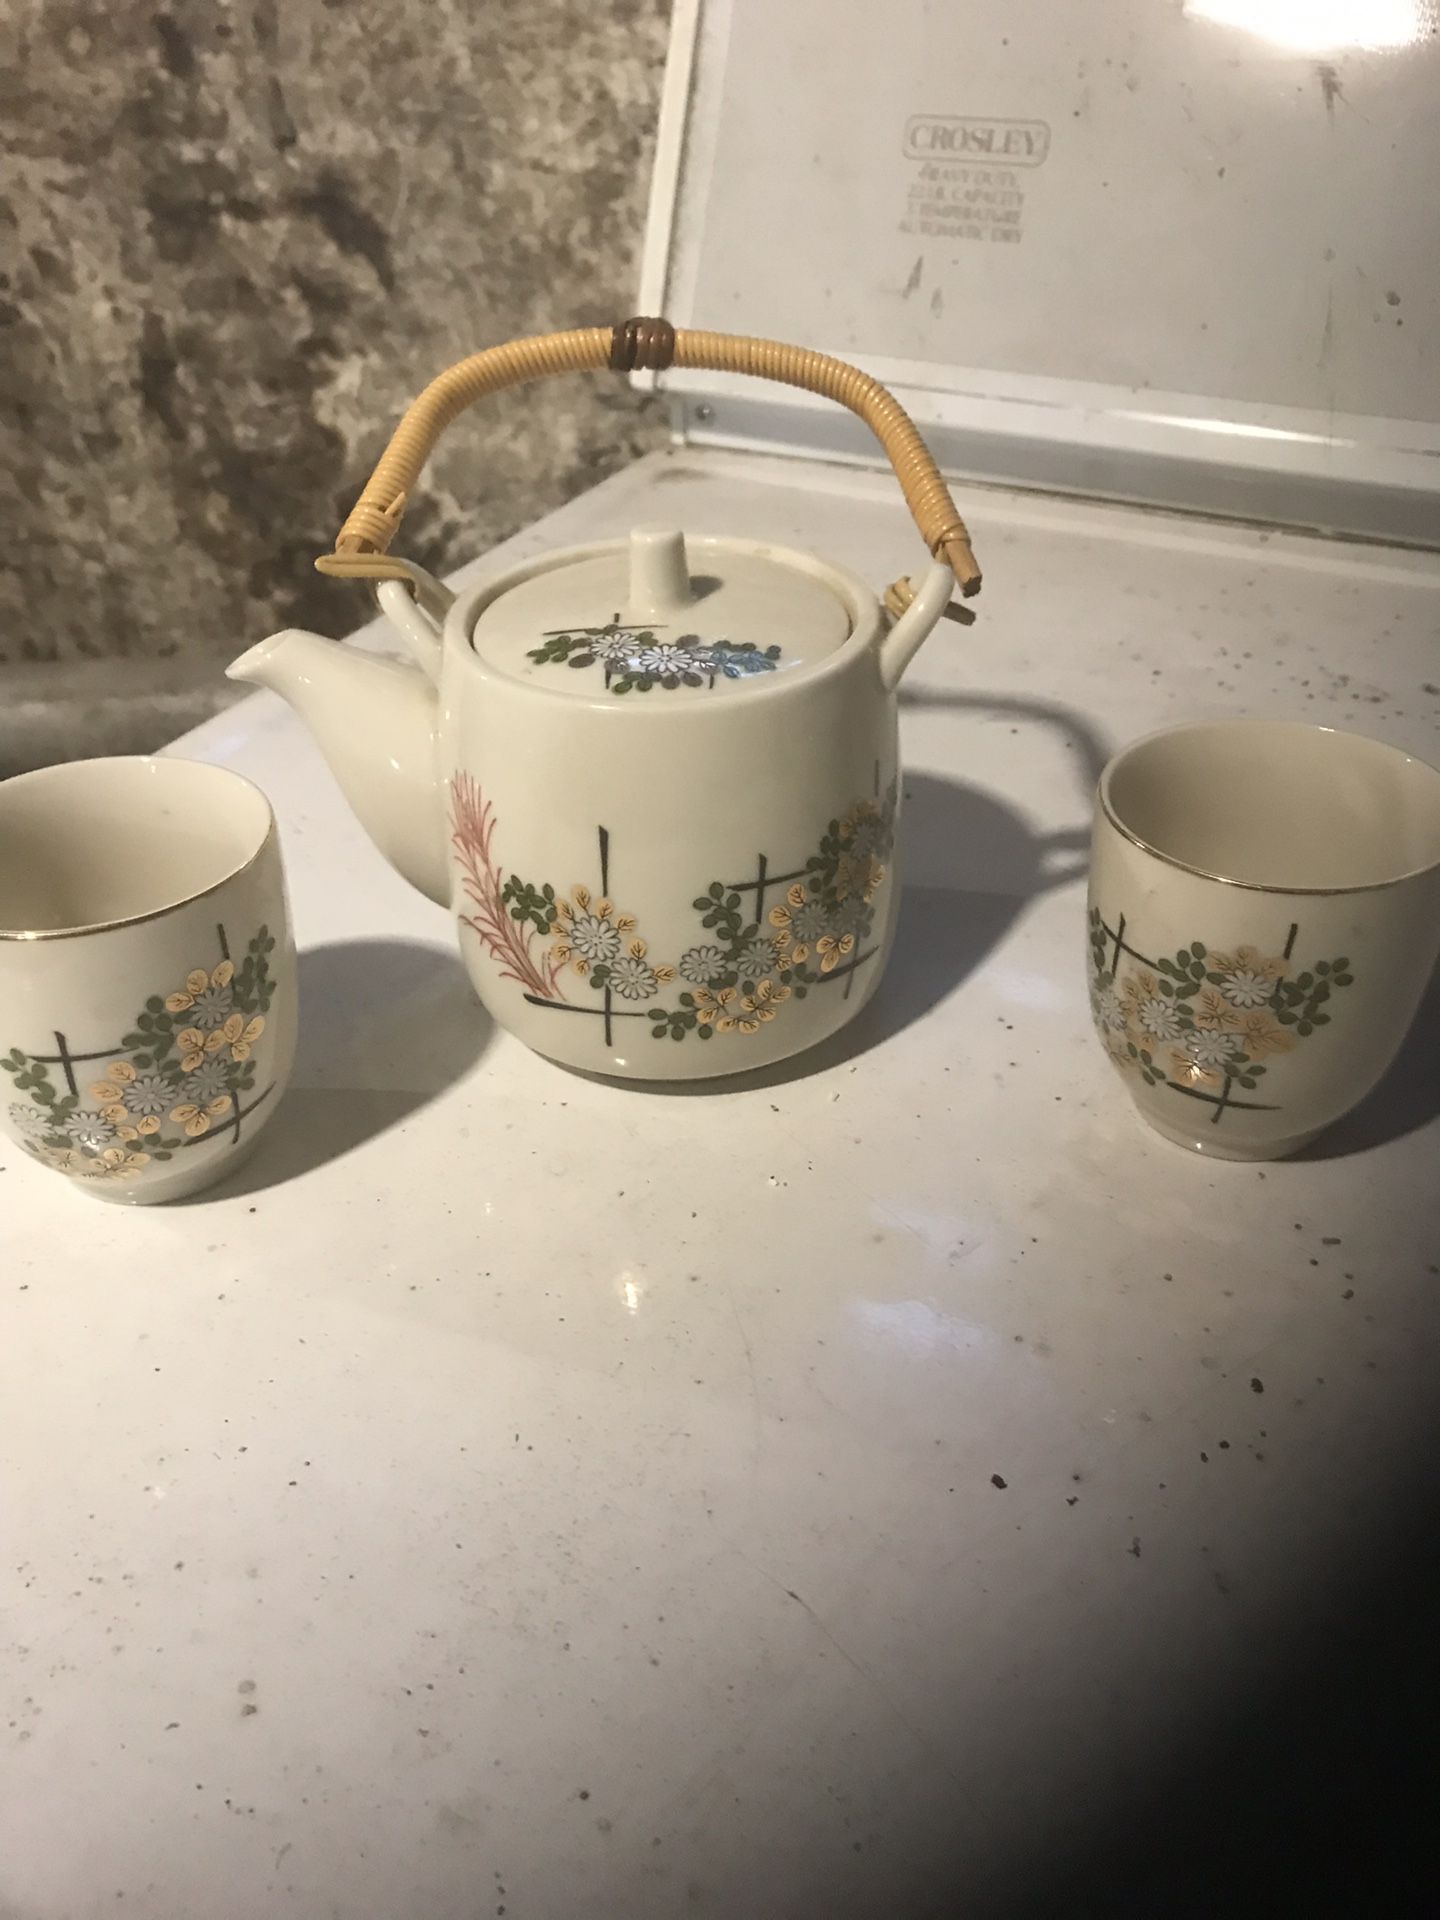 Variety of tea pots and wall art